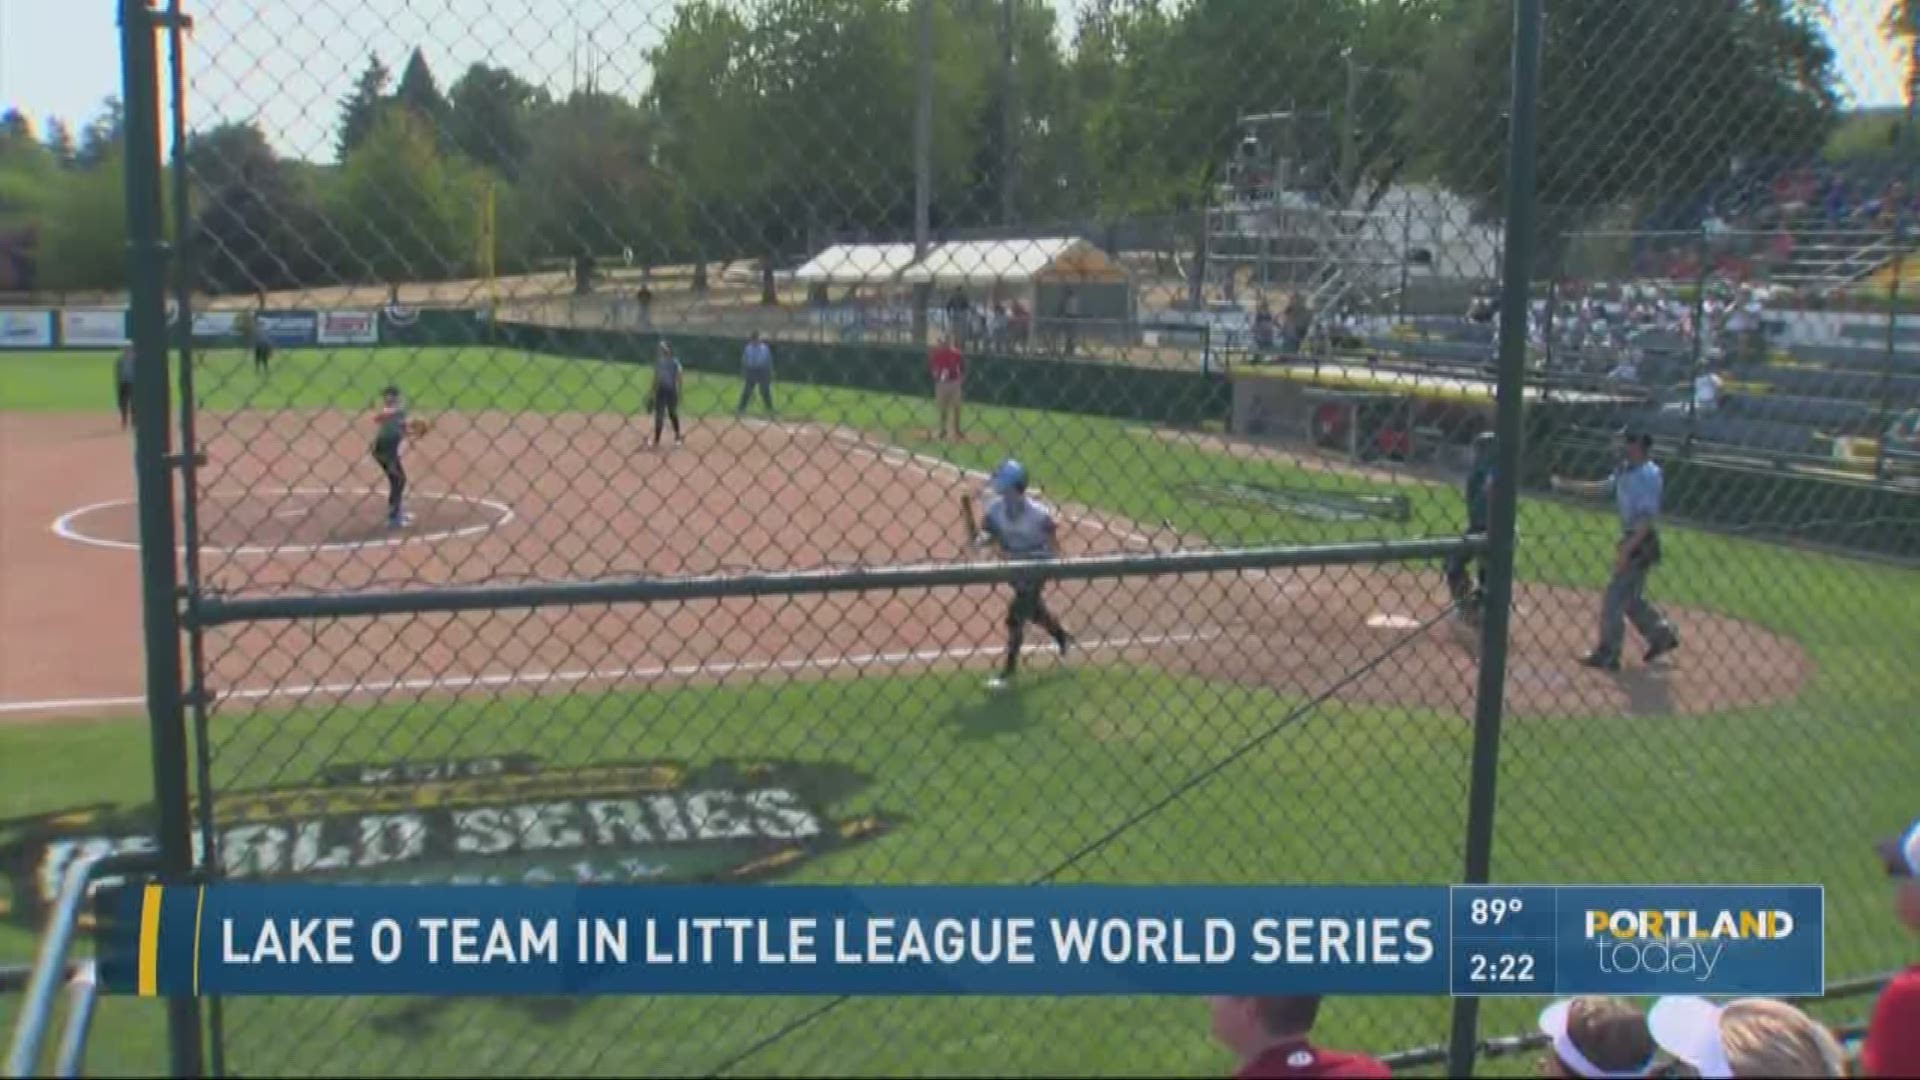 Lake O team in Little League World Series